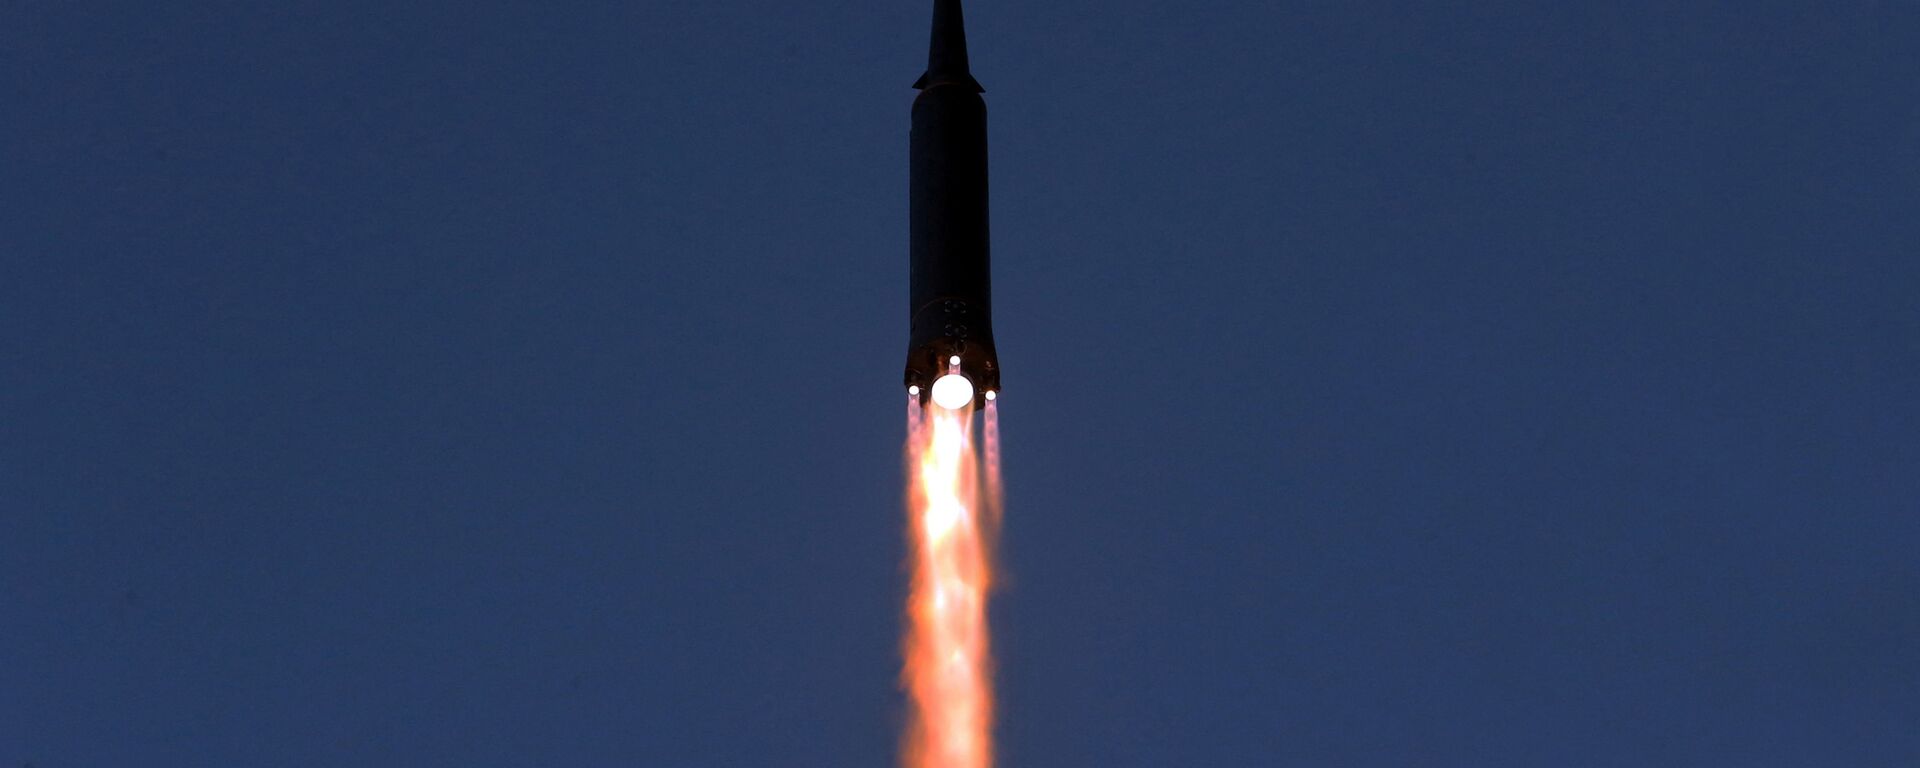 Запуск ракеты в КНДР  - 必定是�p重幻境, 1920, 12.01.2022